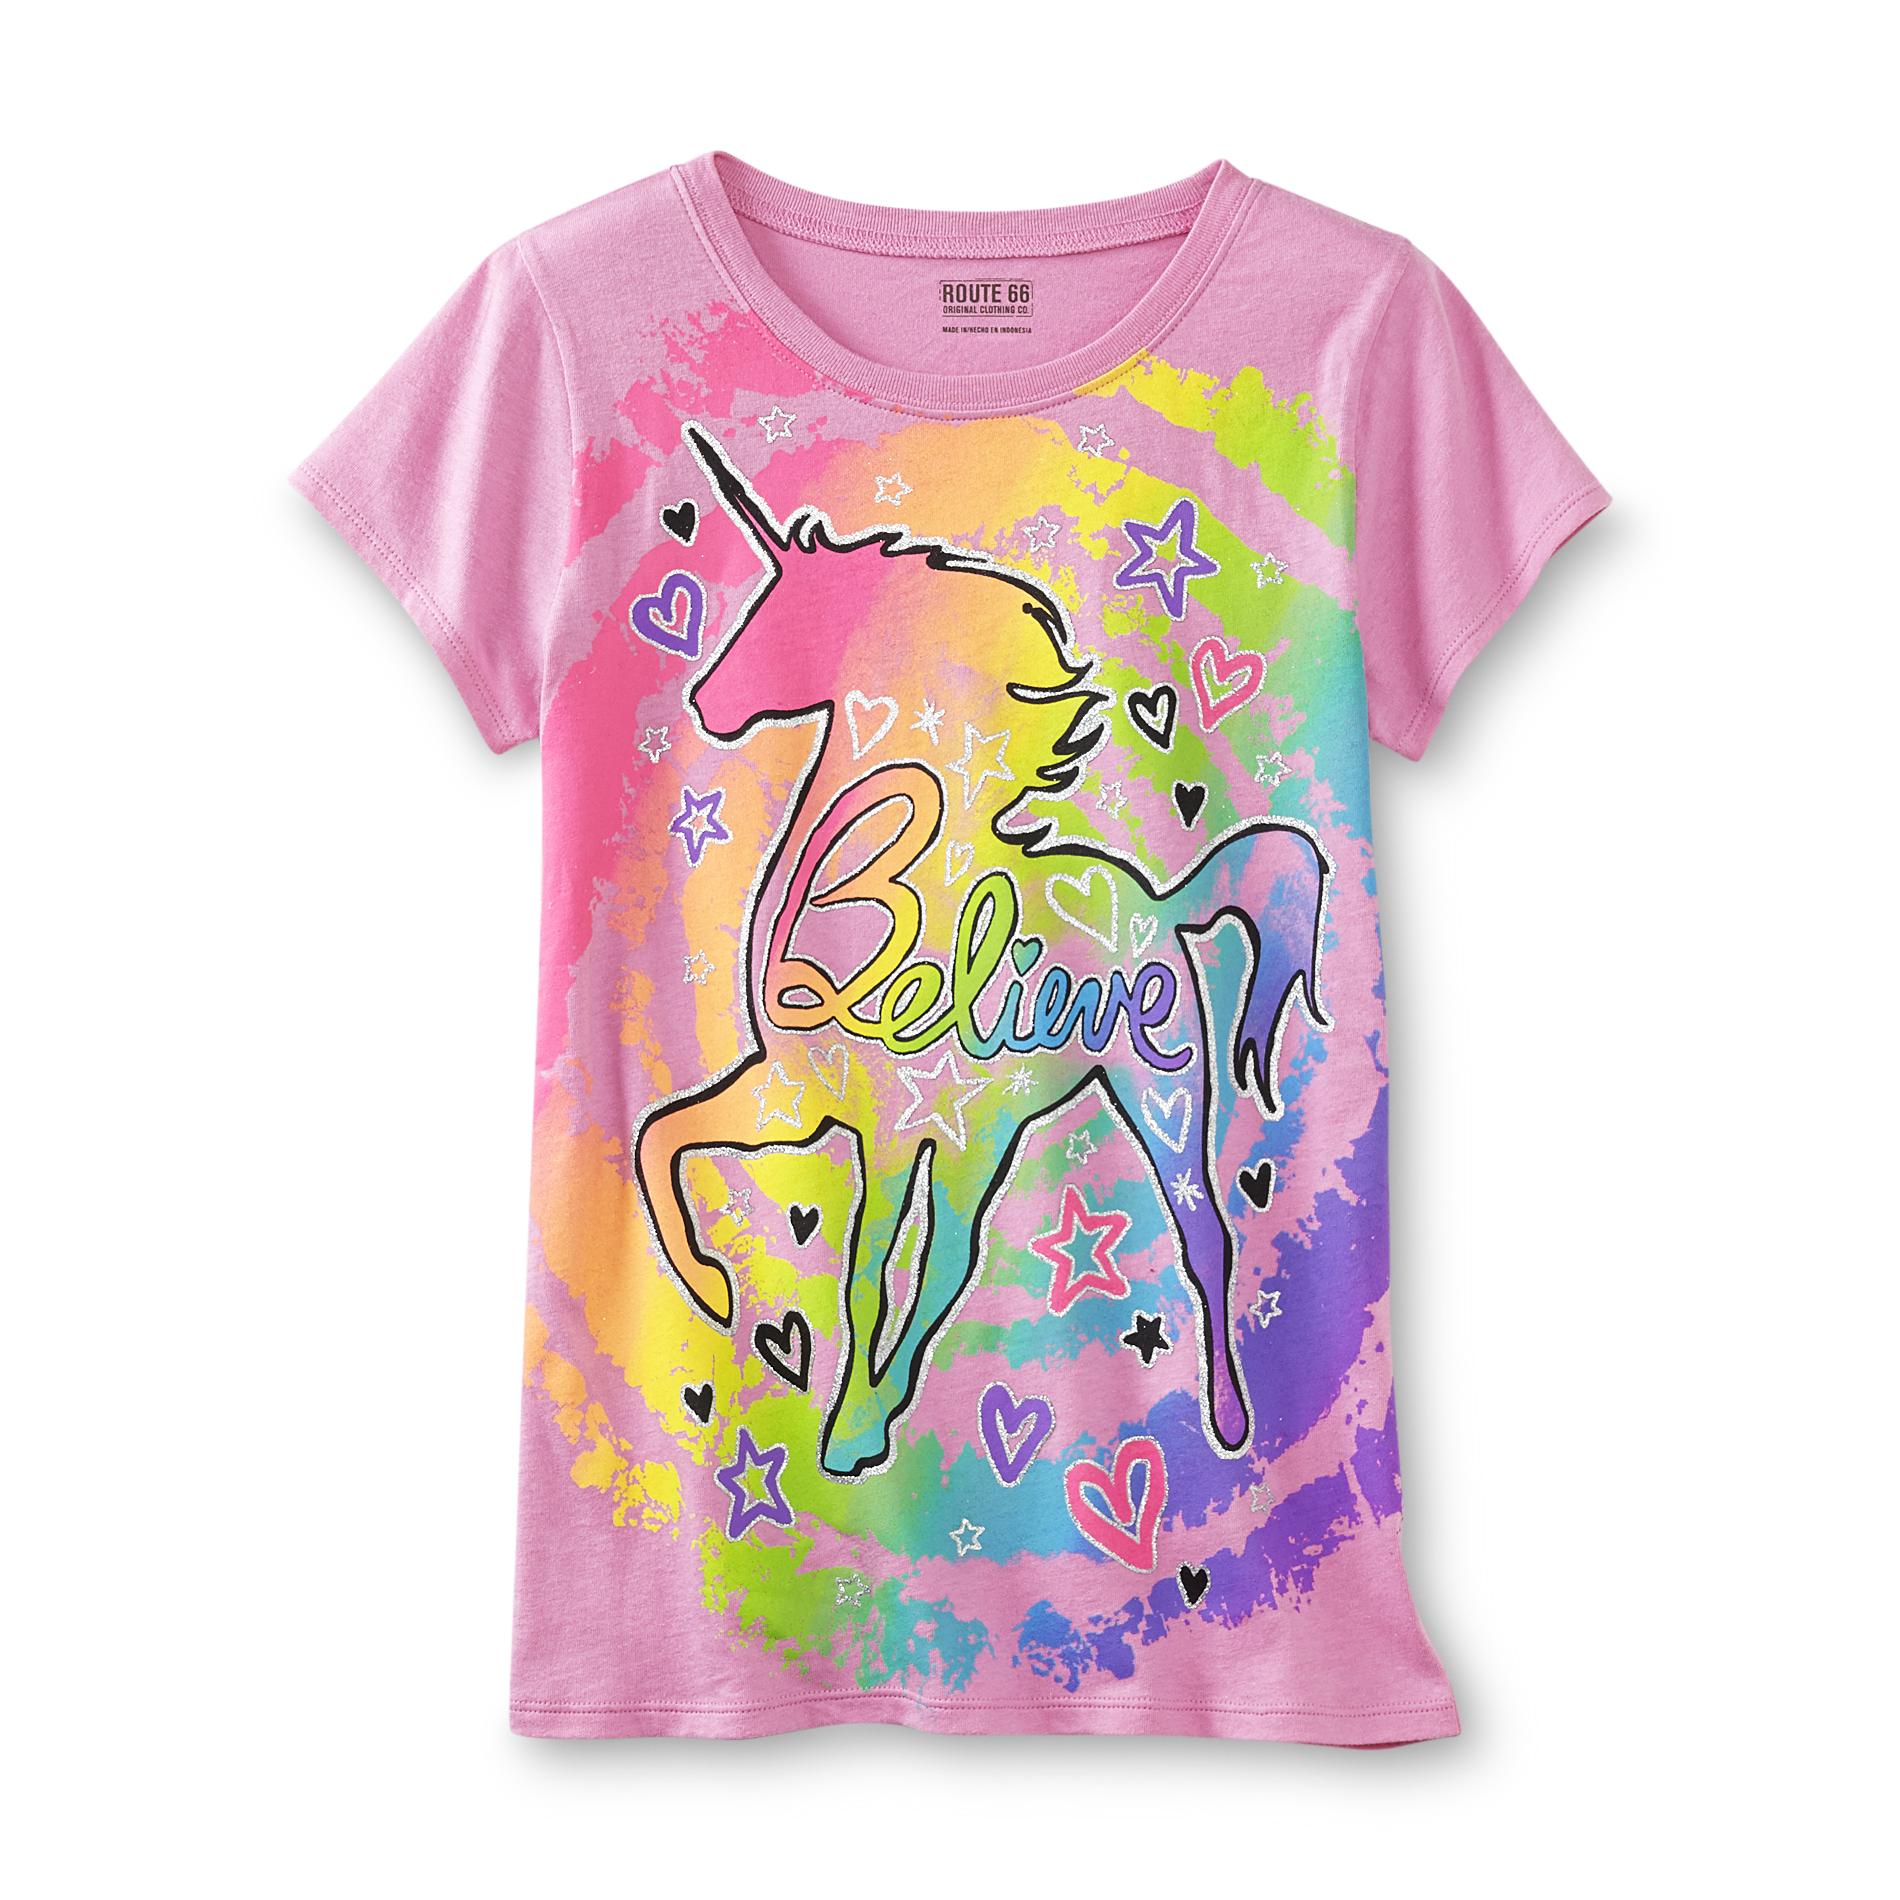 Route 66 Girl's Graphic T-Shirt - Unicorn